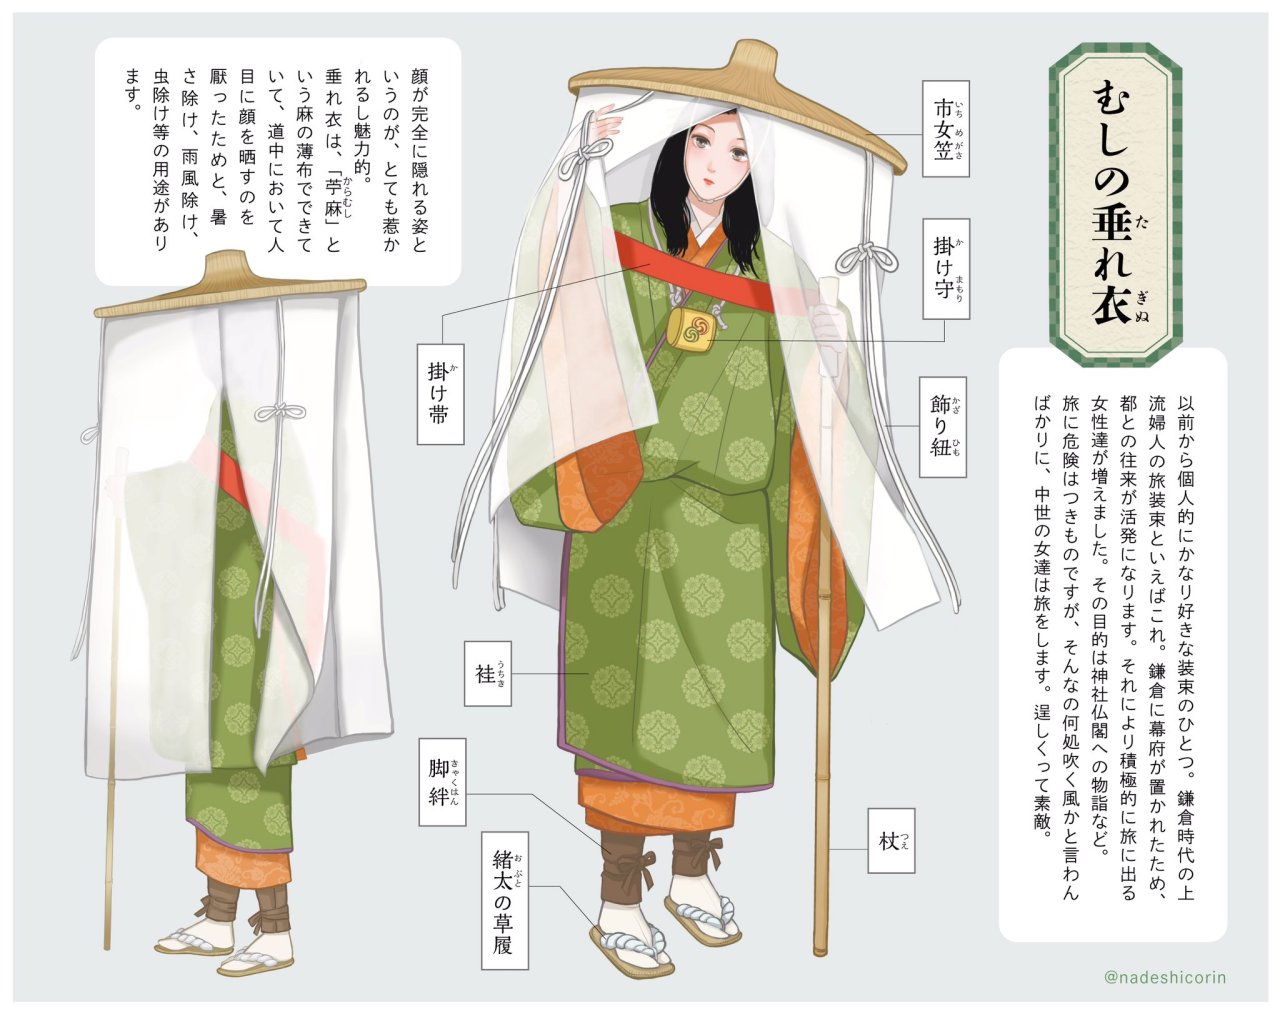 Tanuki Kimono Mushi No Tareginu 虫の垂衣 Travelling Attire By